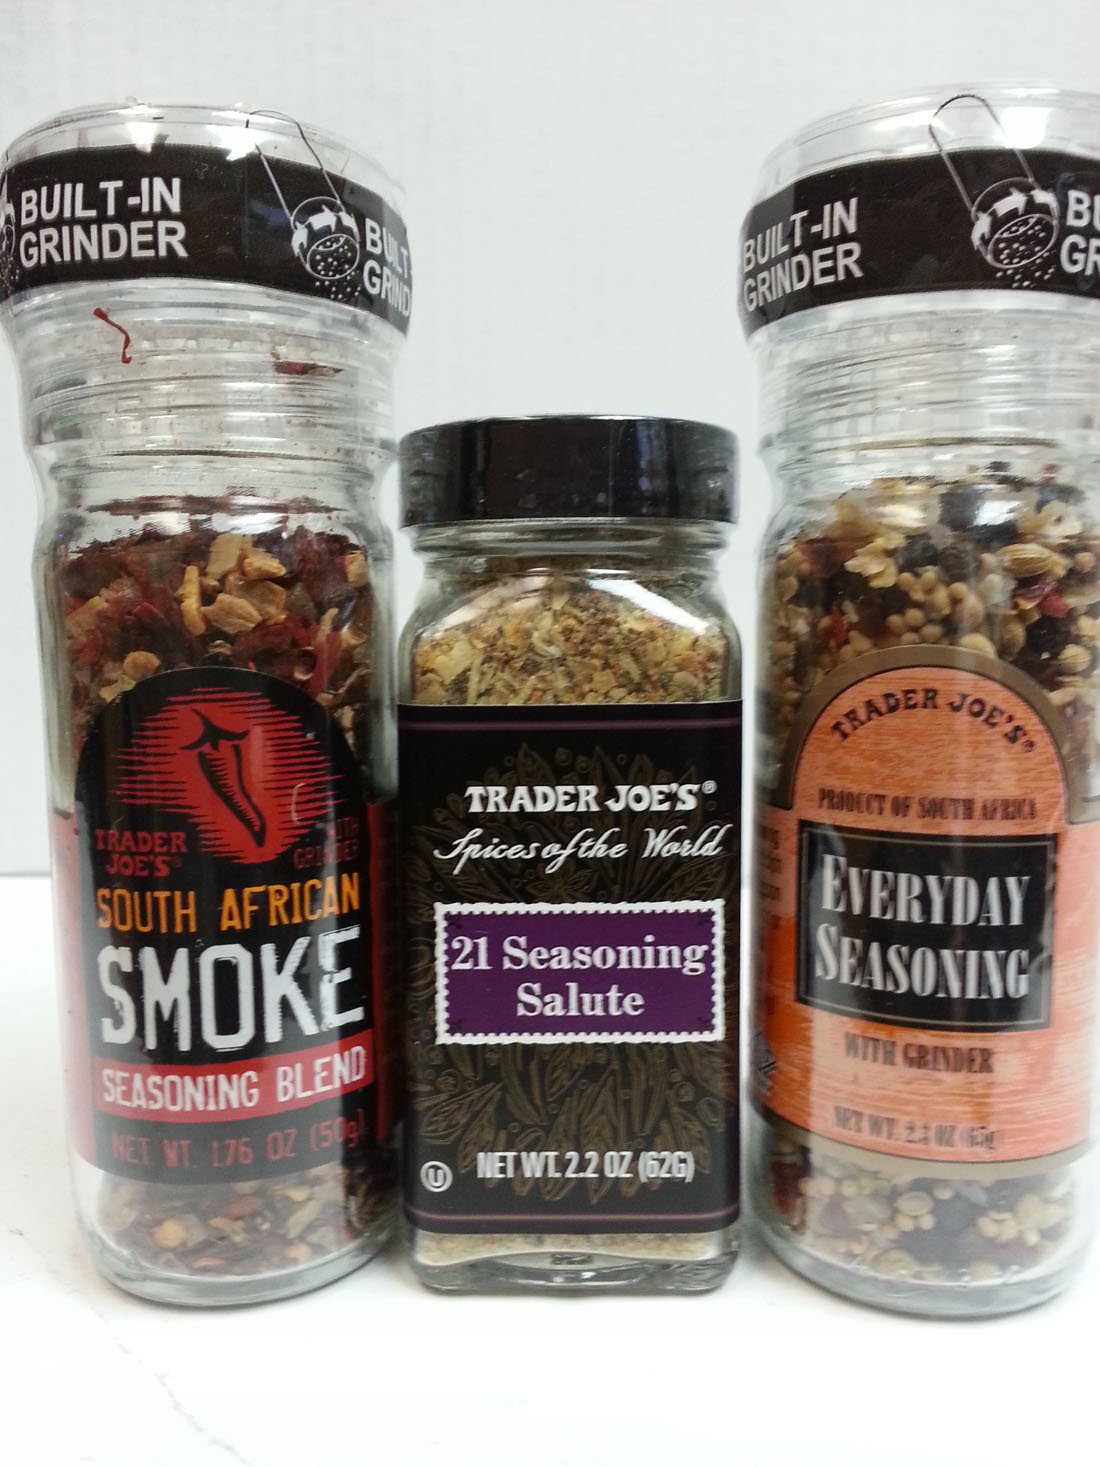 Trader Joe's 3 Seasoning Assortment - Everyday Seasoning, 21 Seasoning Salute, South African Smoke Seasoning Blend